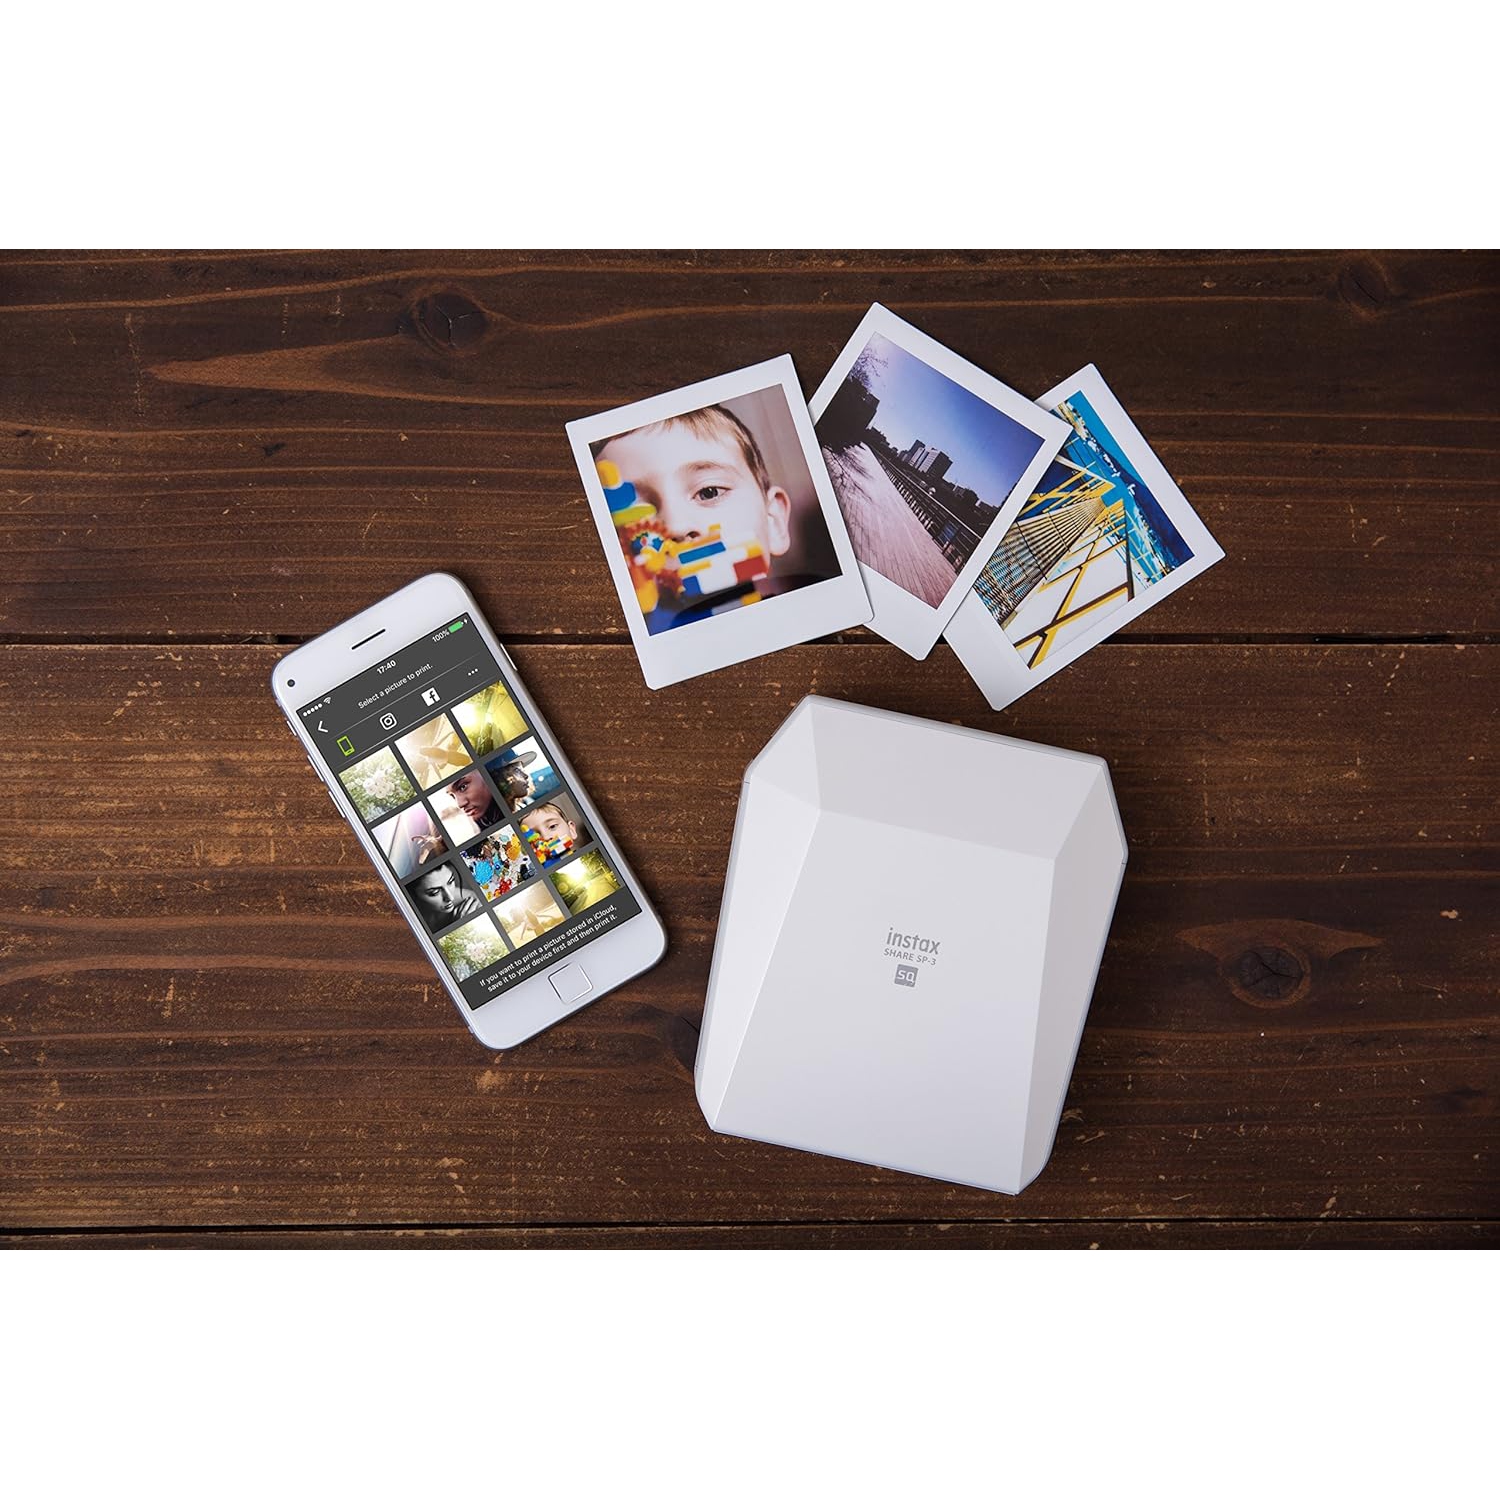 Fujifilm Instax Share Smartphone Printer SP-3 - White 